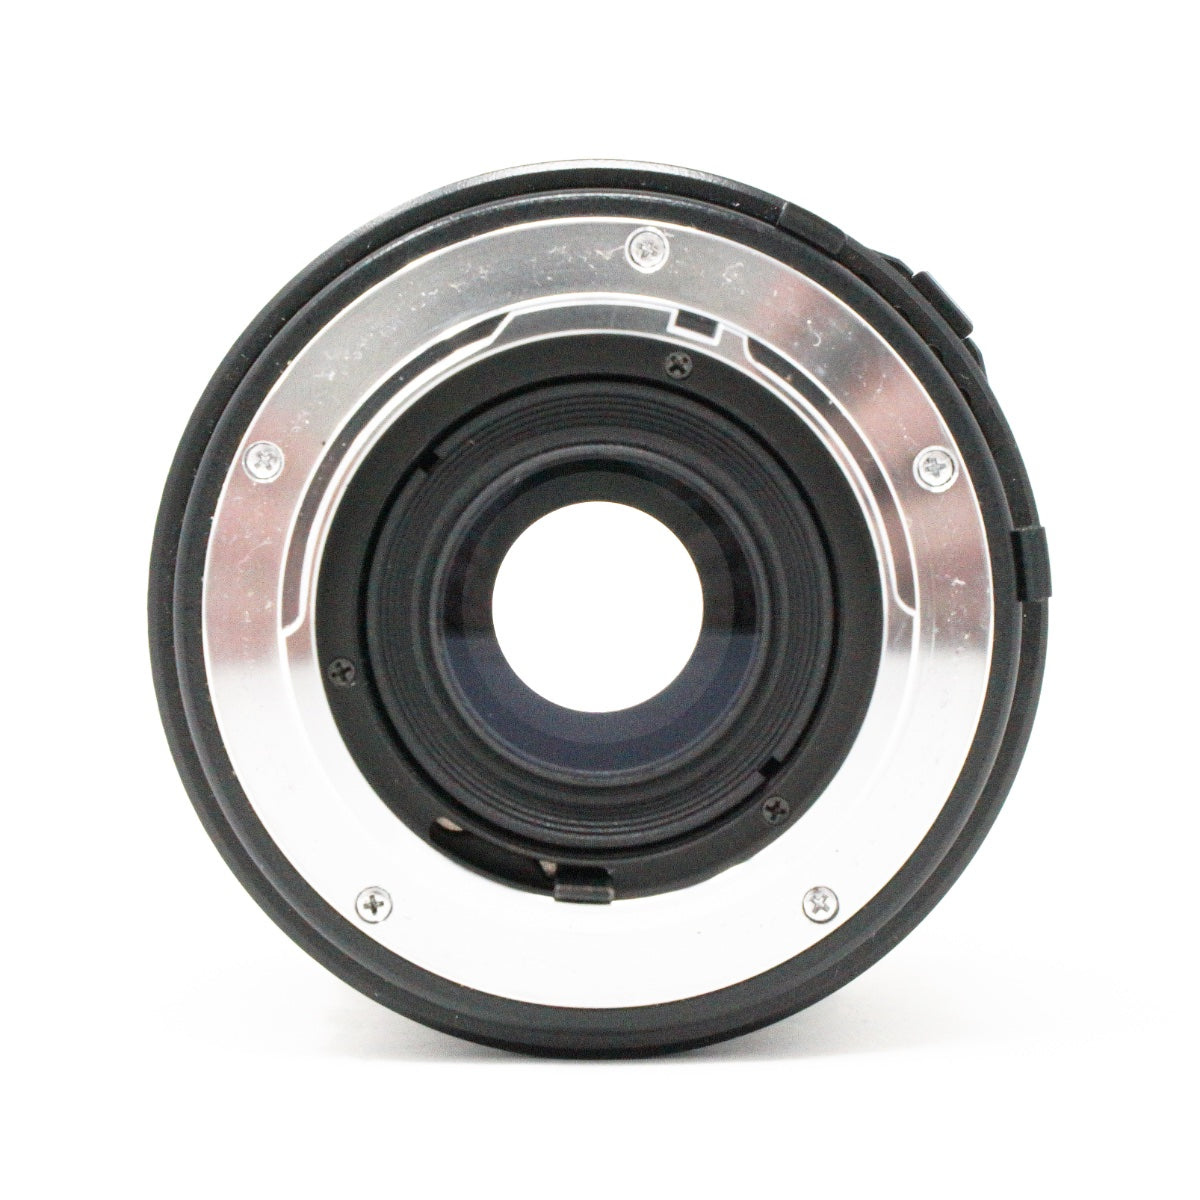 Used Sigma 28-70mm F3.5-4.5 for Minolta MD Film cameras